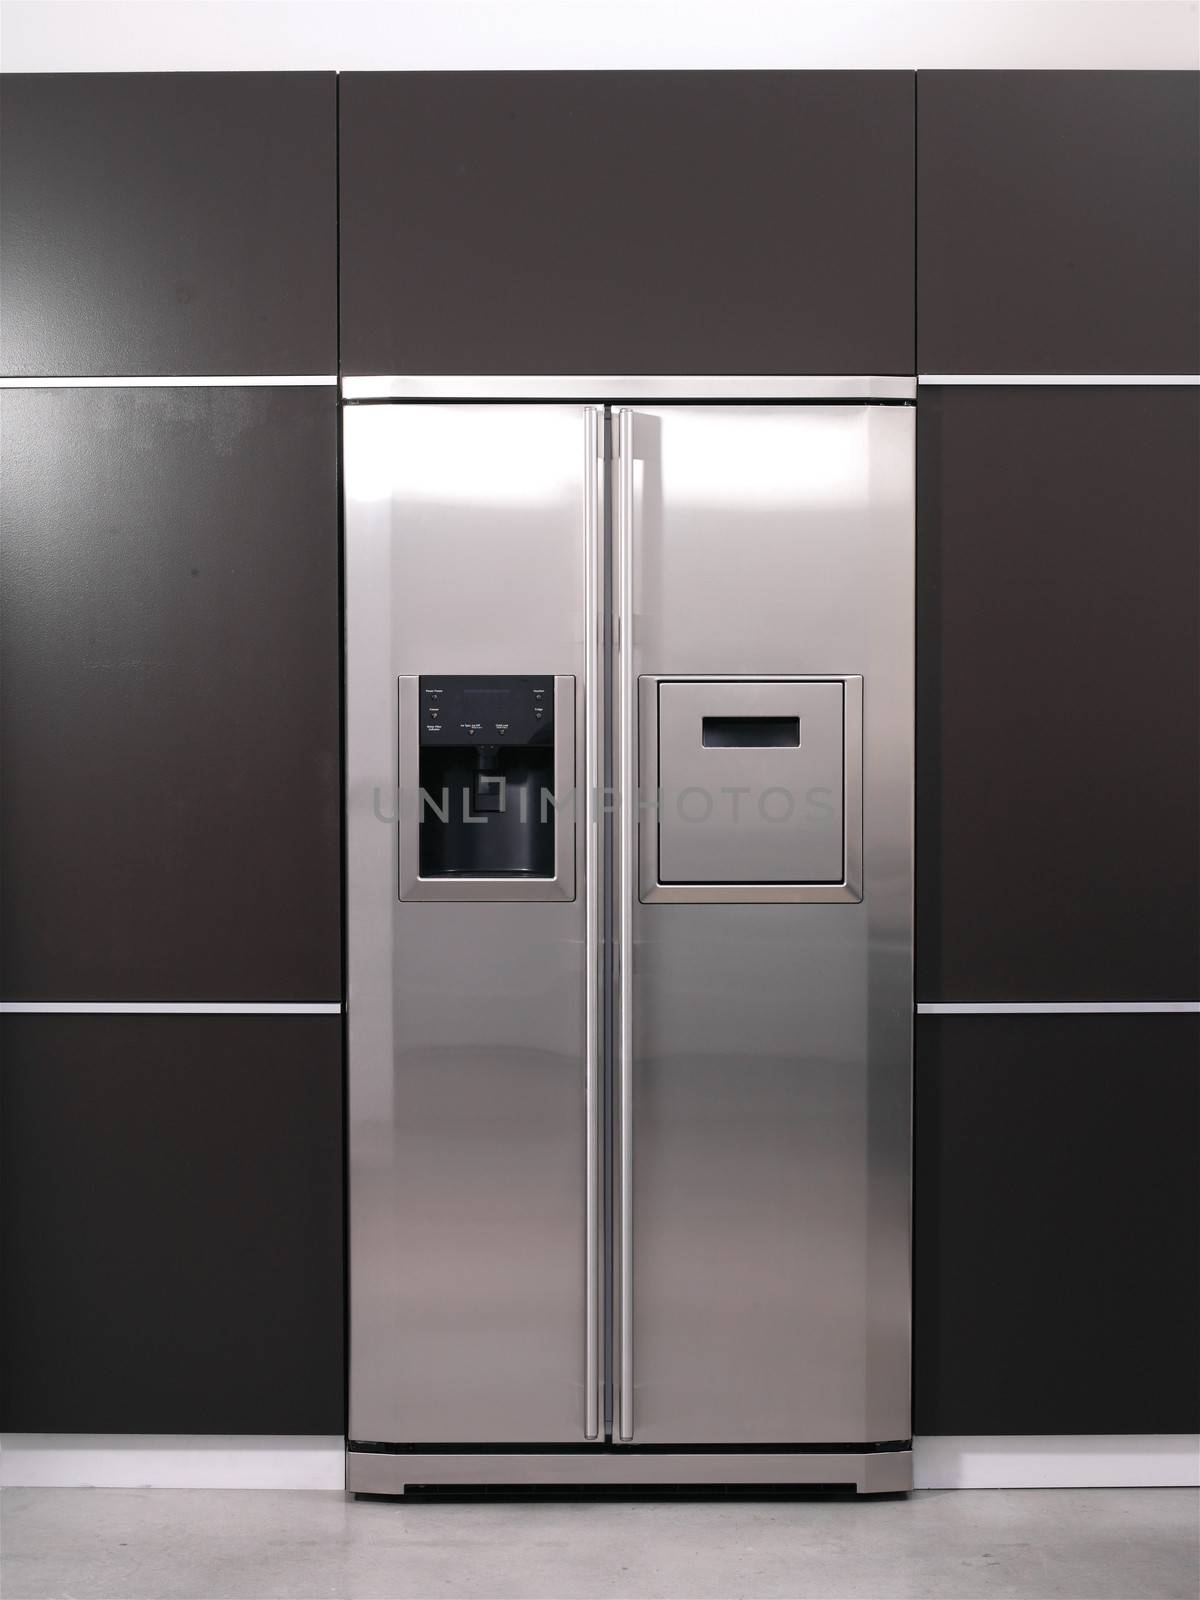 Modern refrigerator by toocan